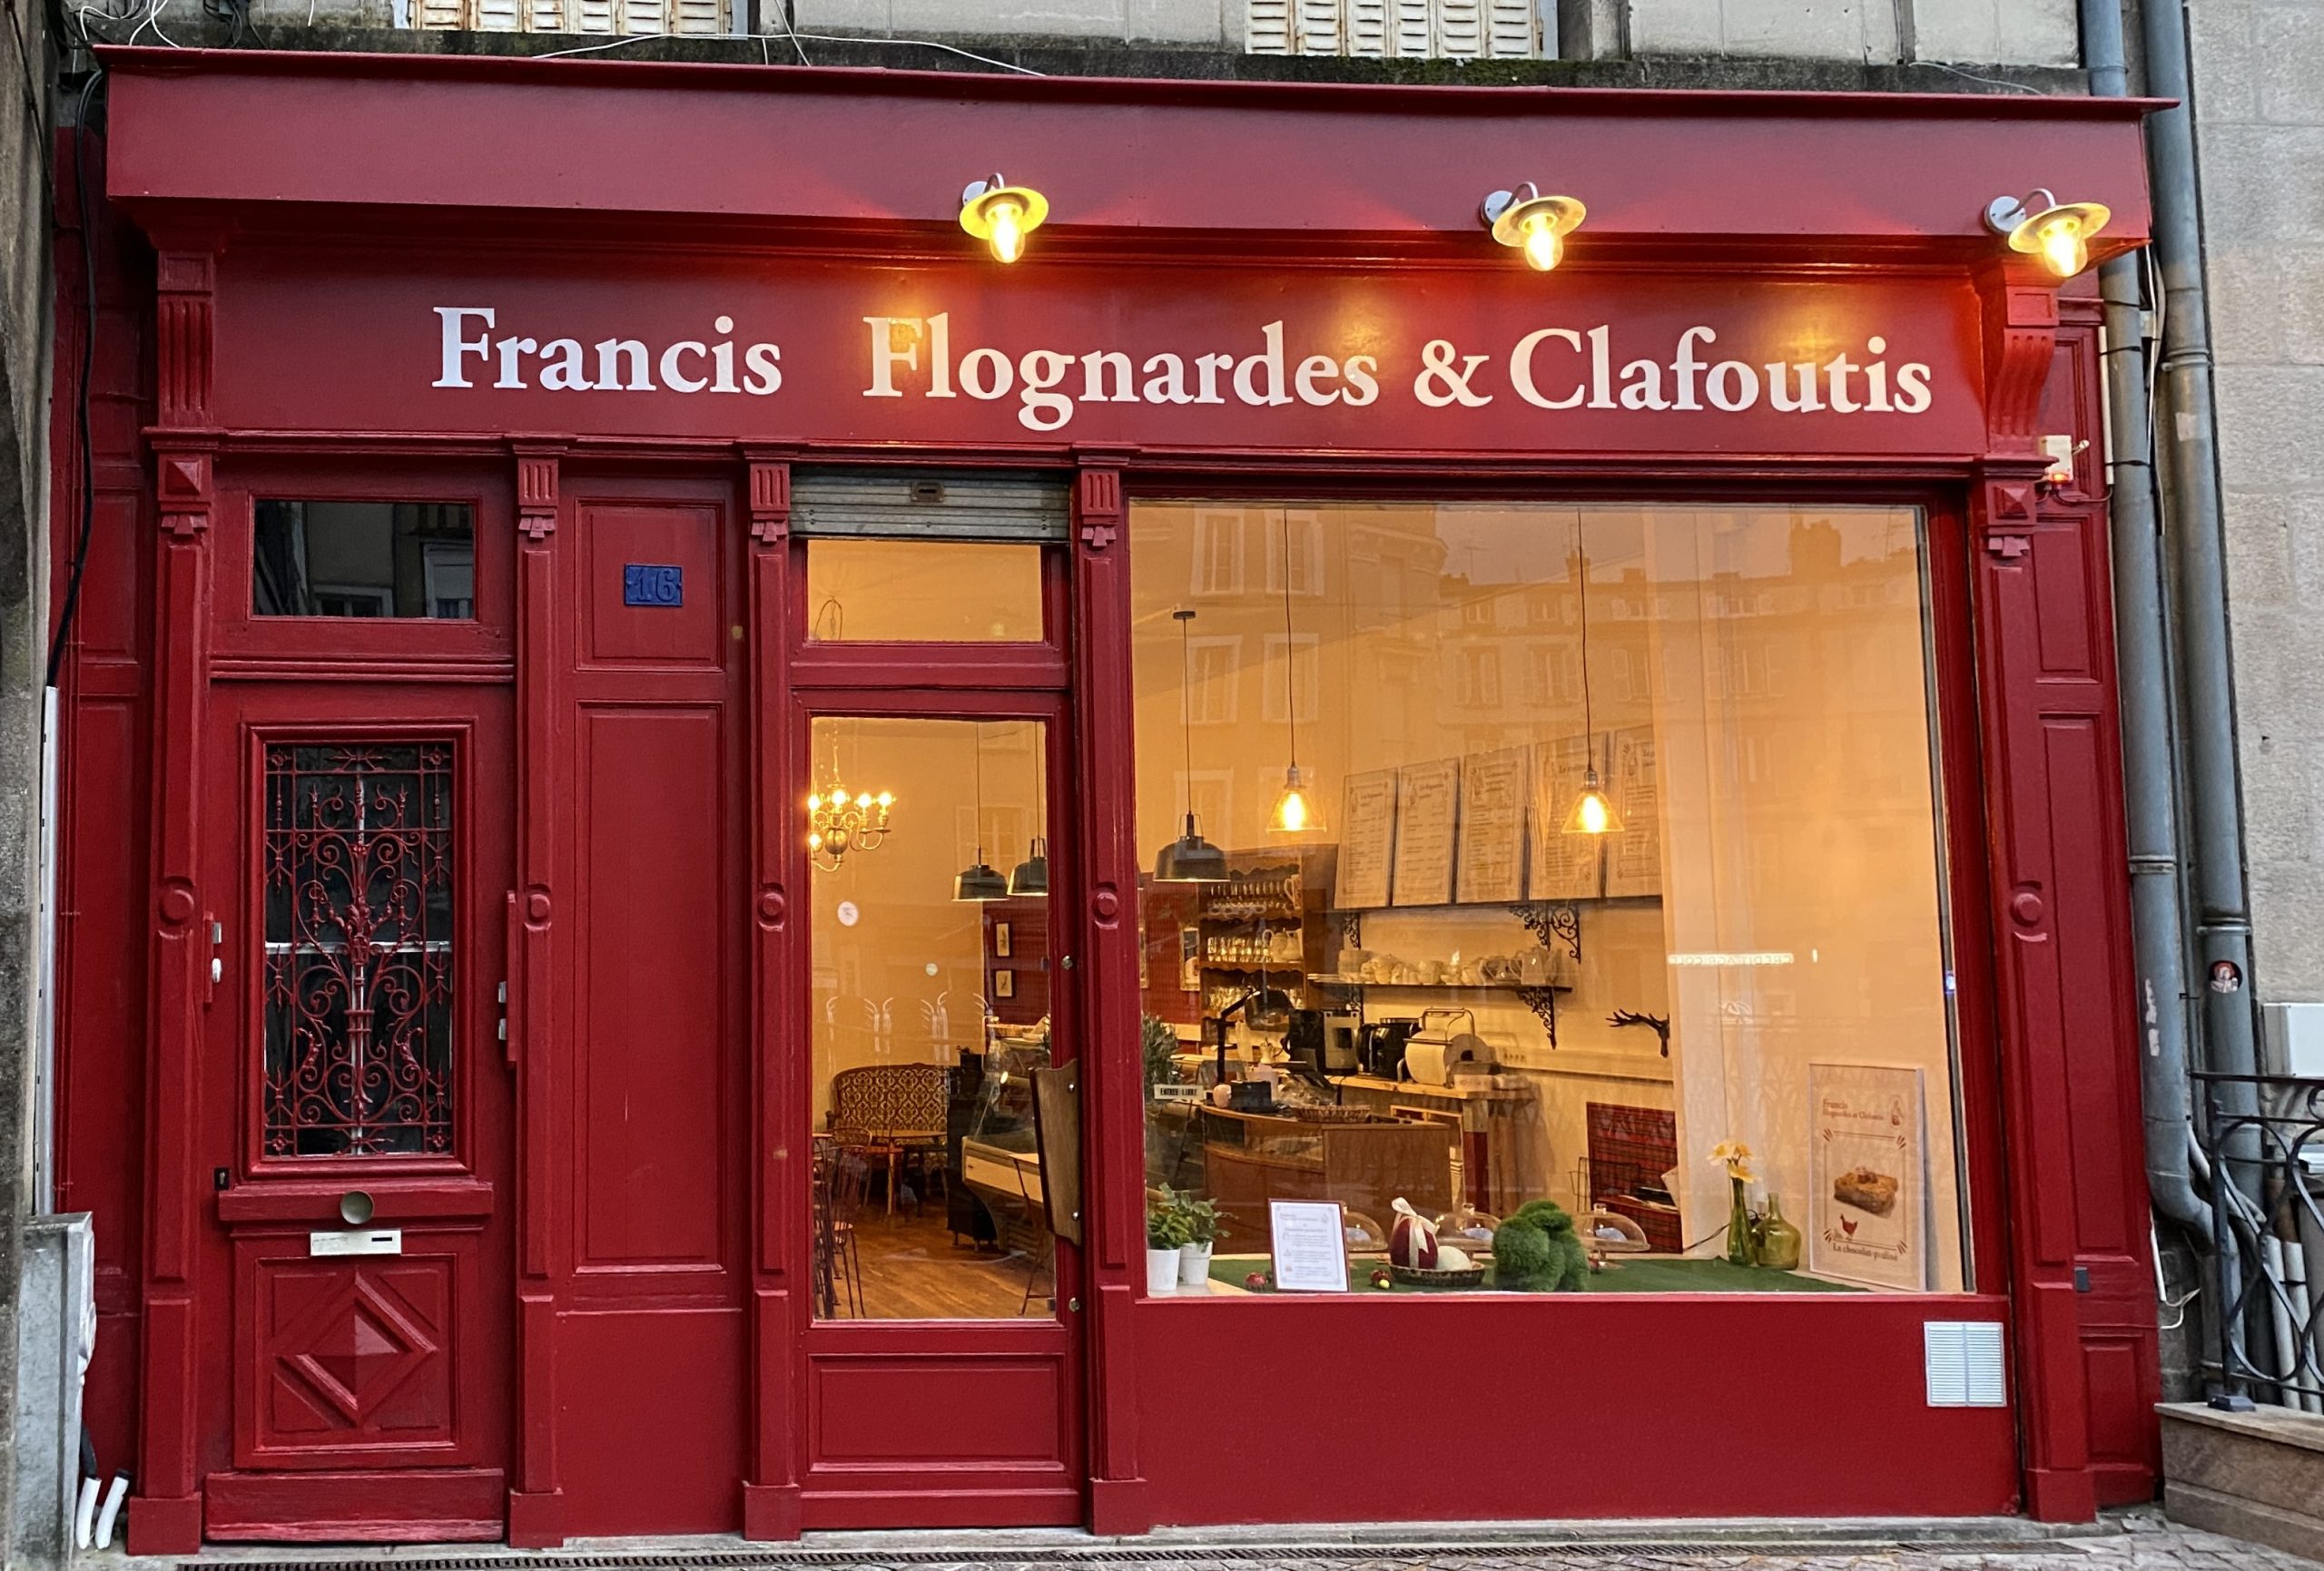 Francis Flognardes et clafoutis